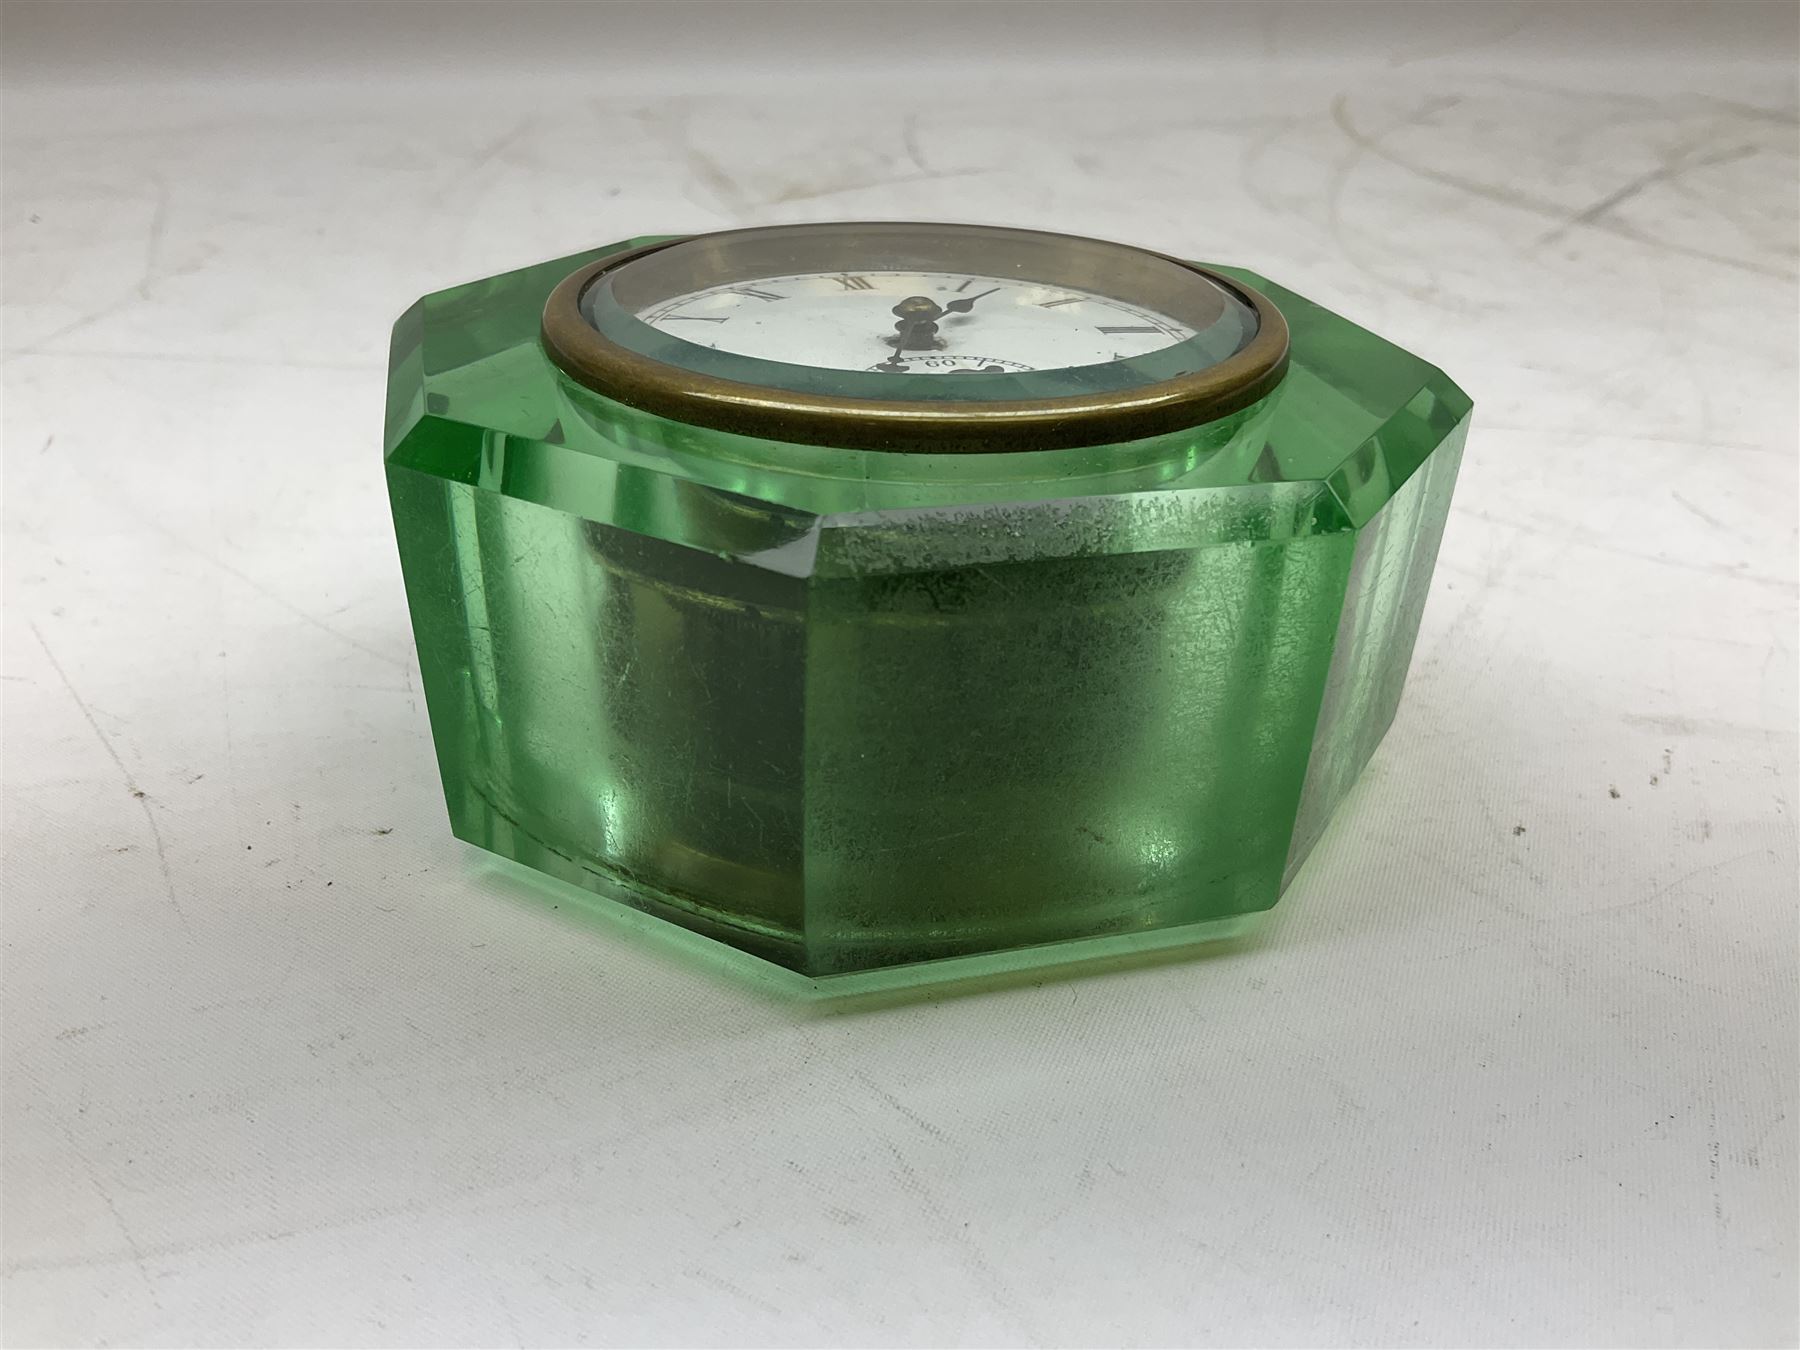 E N Welch art deco style uranium glass clock - Image 4 of 4